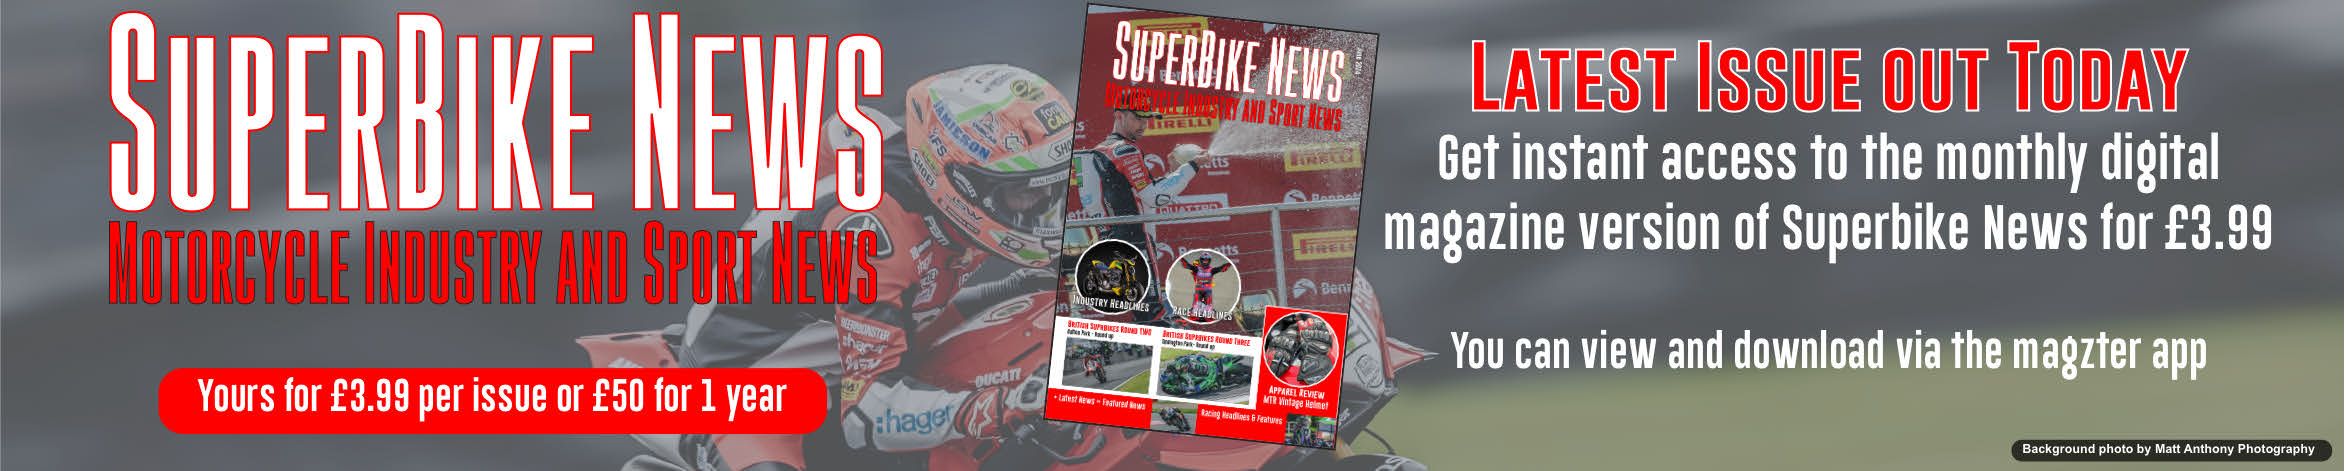 Superbike News Magazine